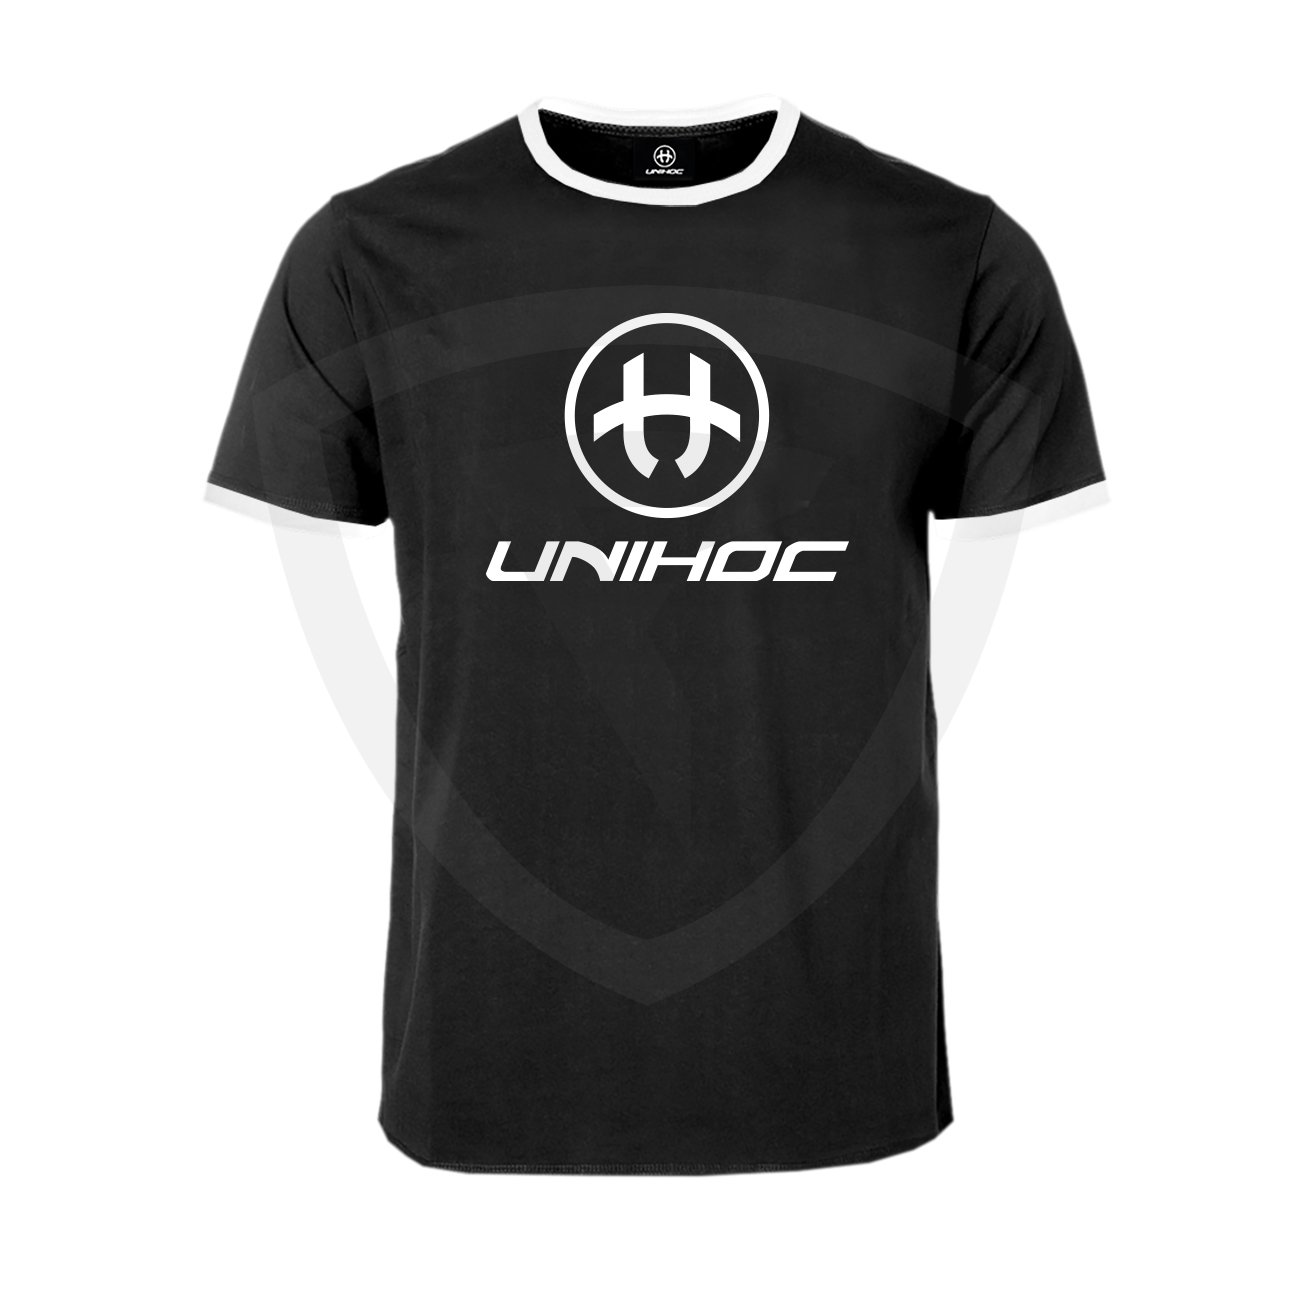 Unihoc T-shirt Breeze Black JR 160 černá